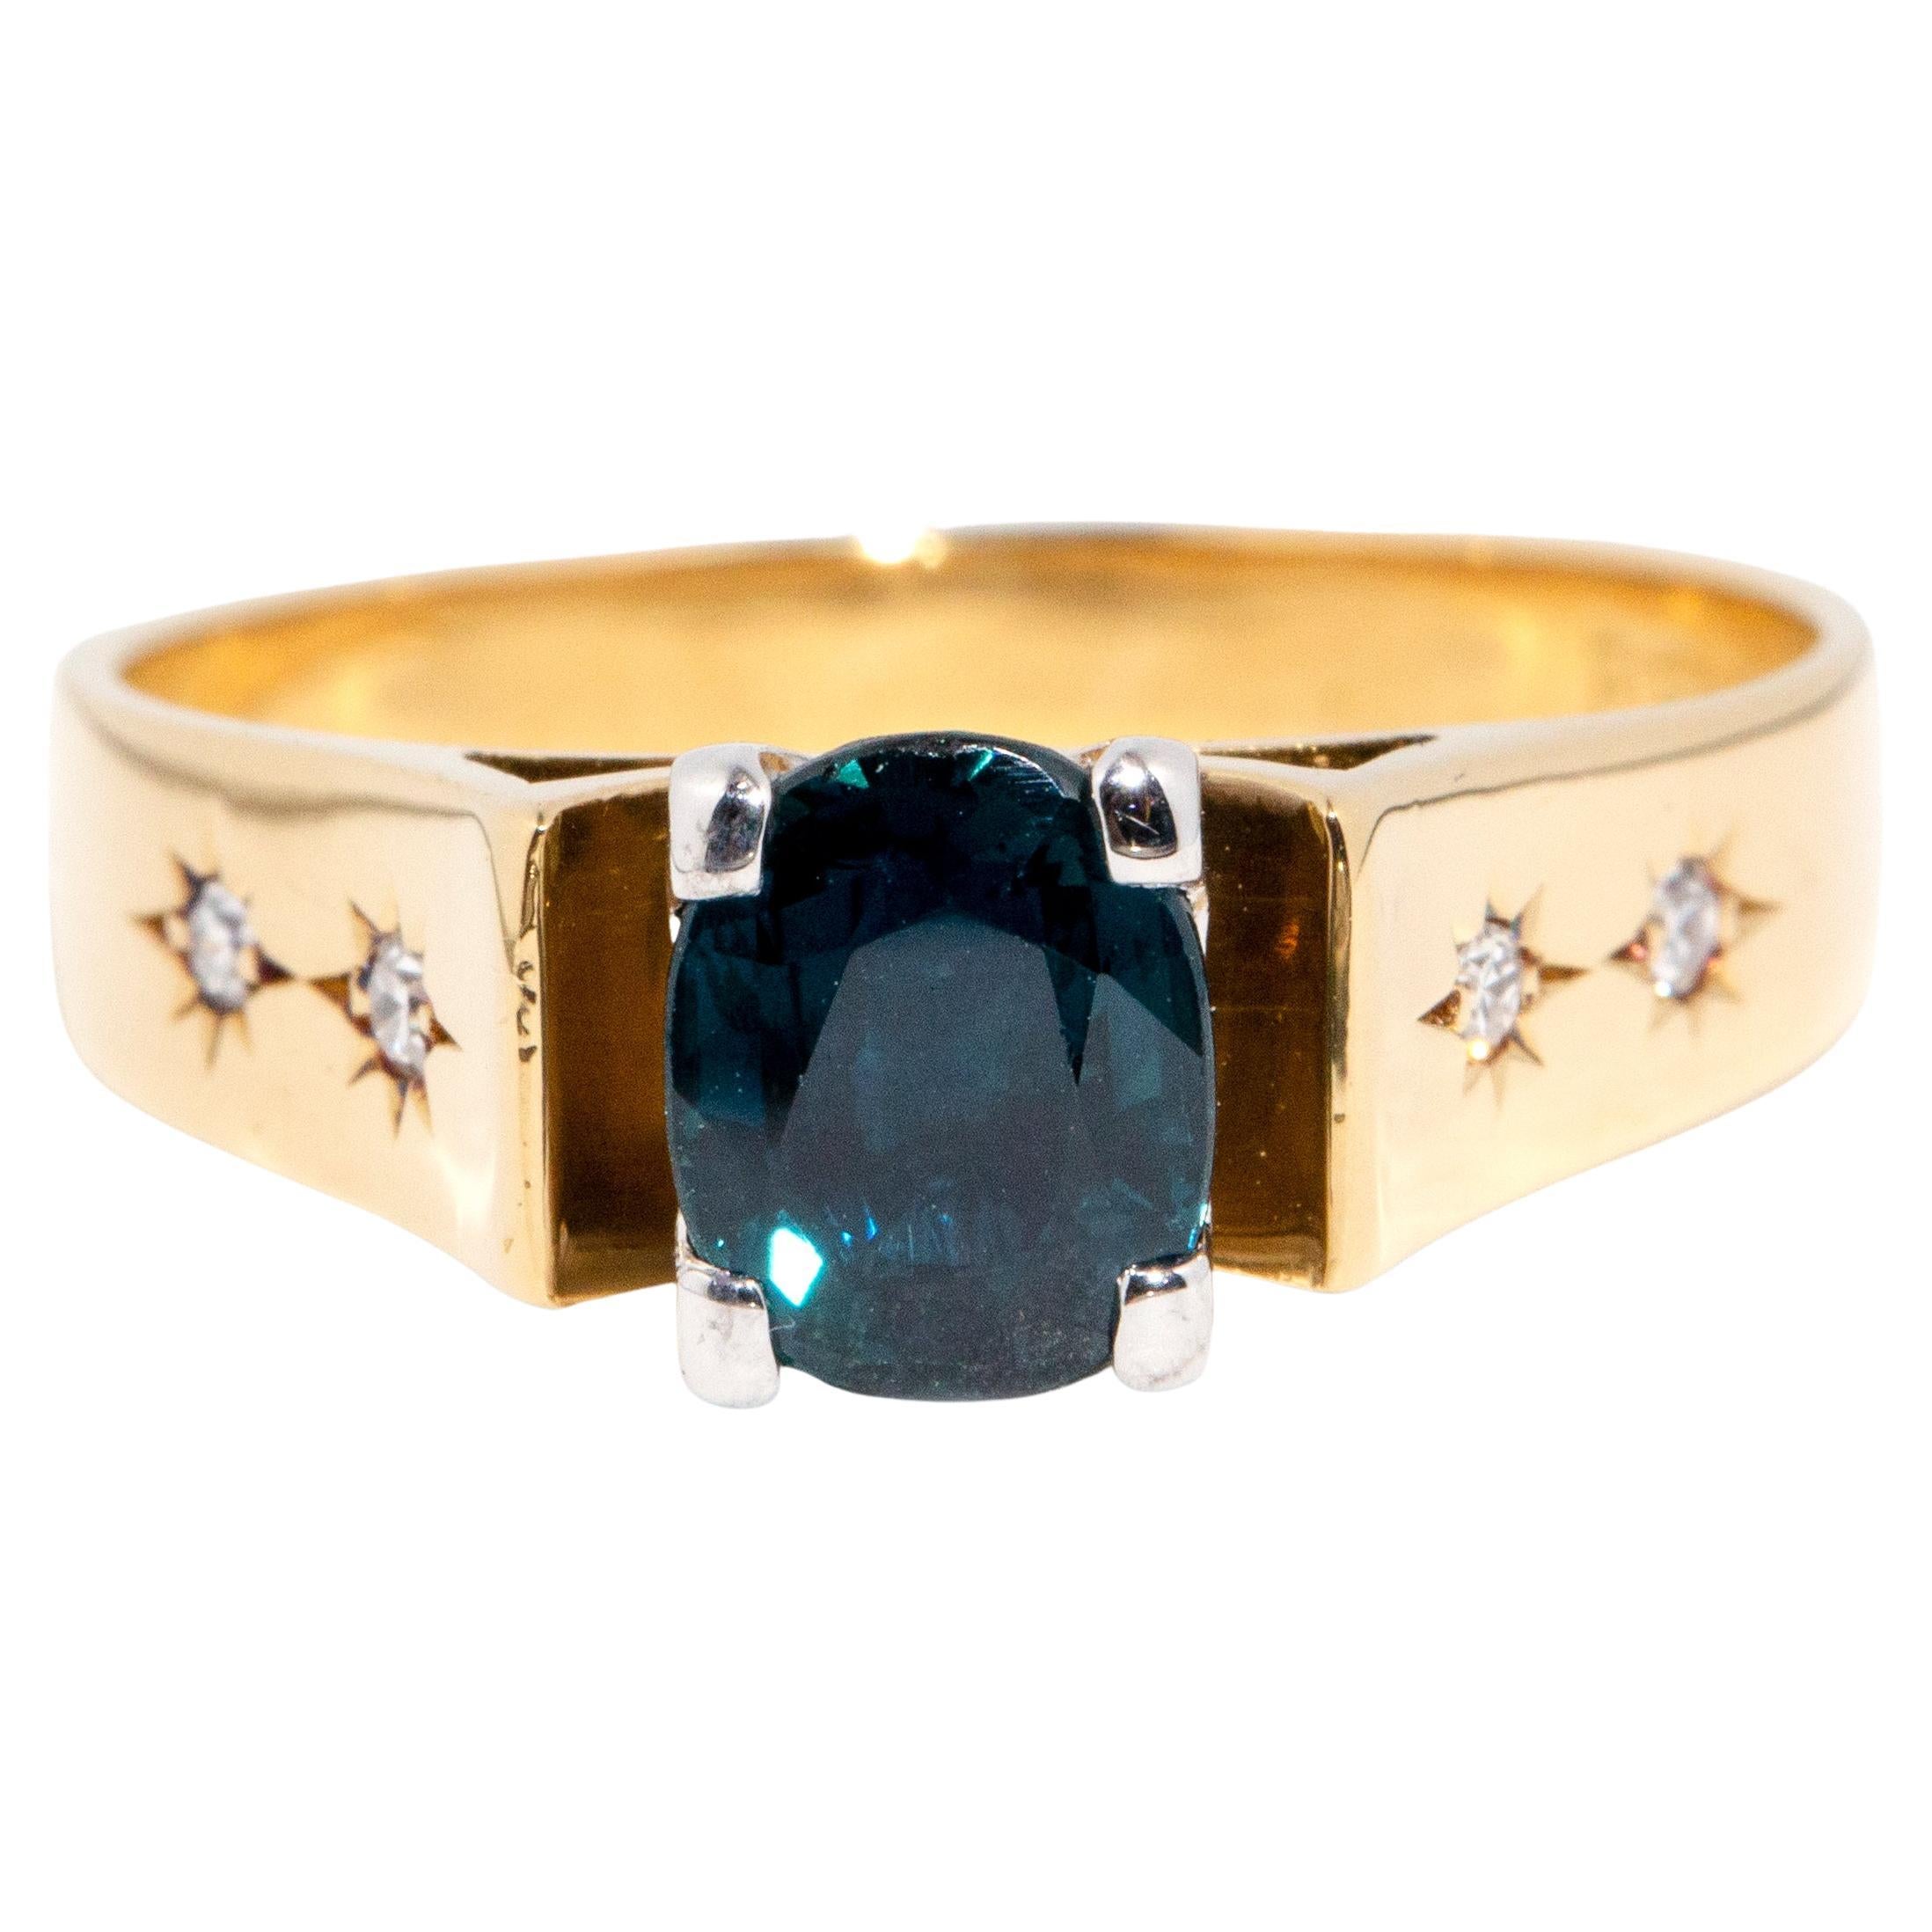 Vintage circa 1970s 1.62 Carat Sapphire & Star Set Diamond 18 Carat Gold Ring